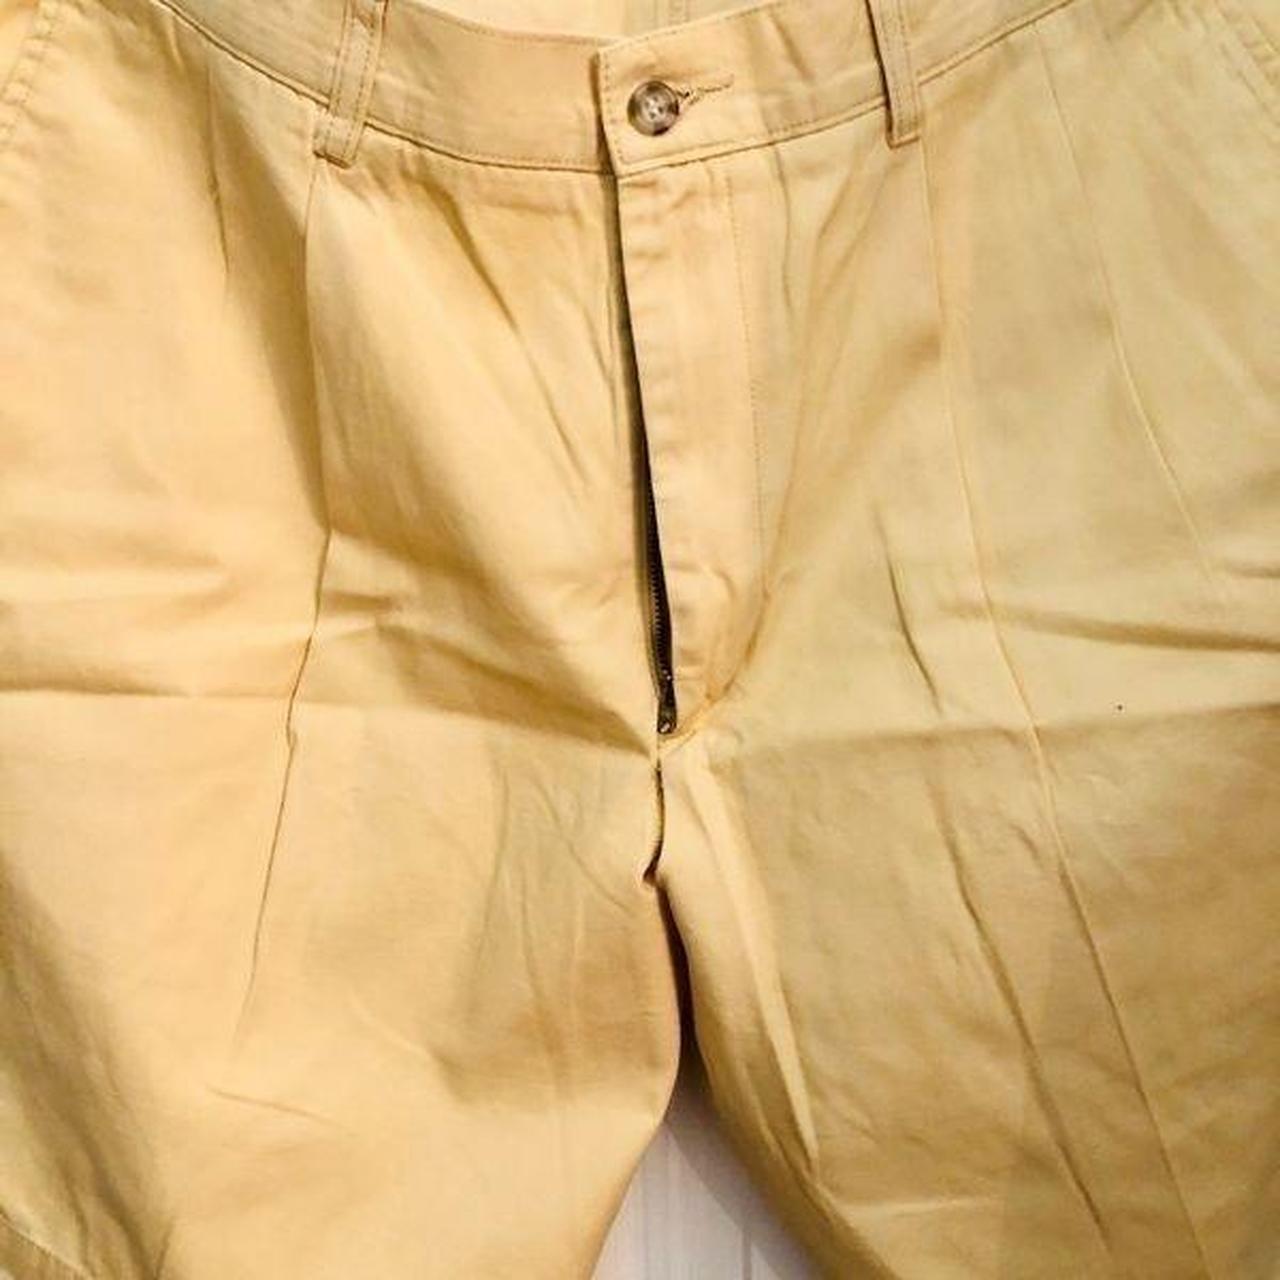 Product Image 1 - Men’s Dockers shorts. Excellent condition,